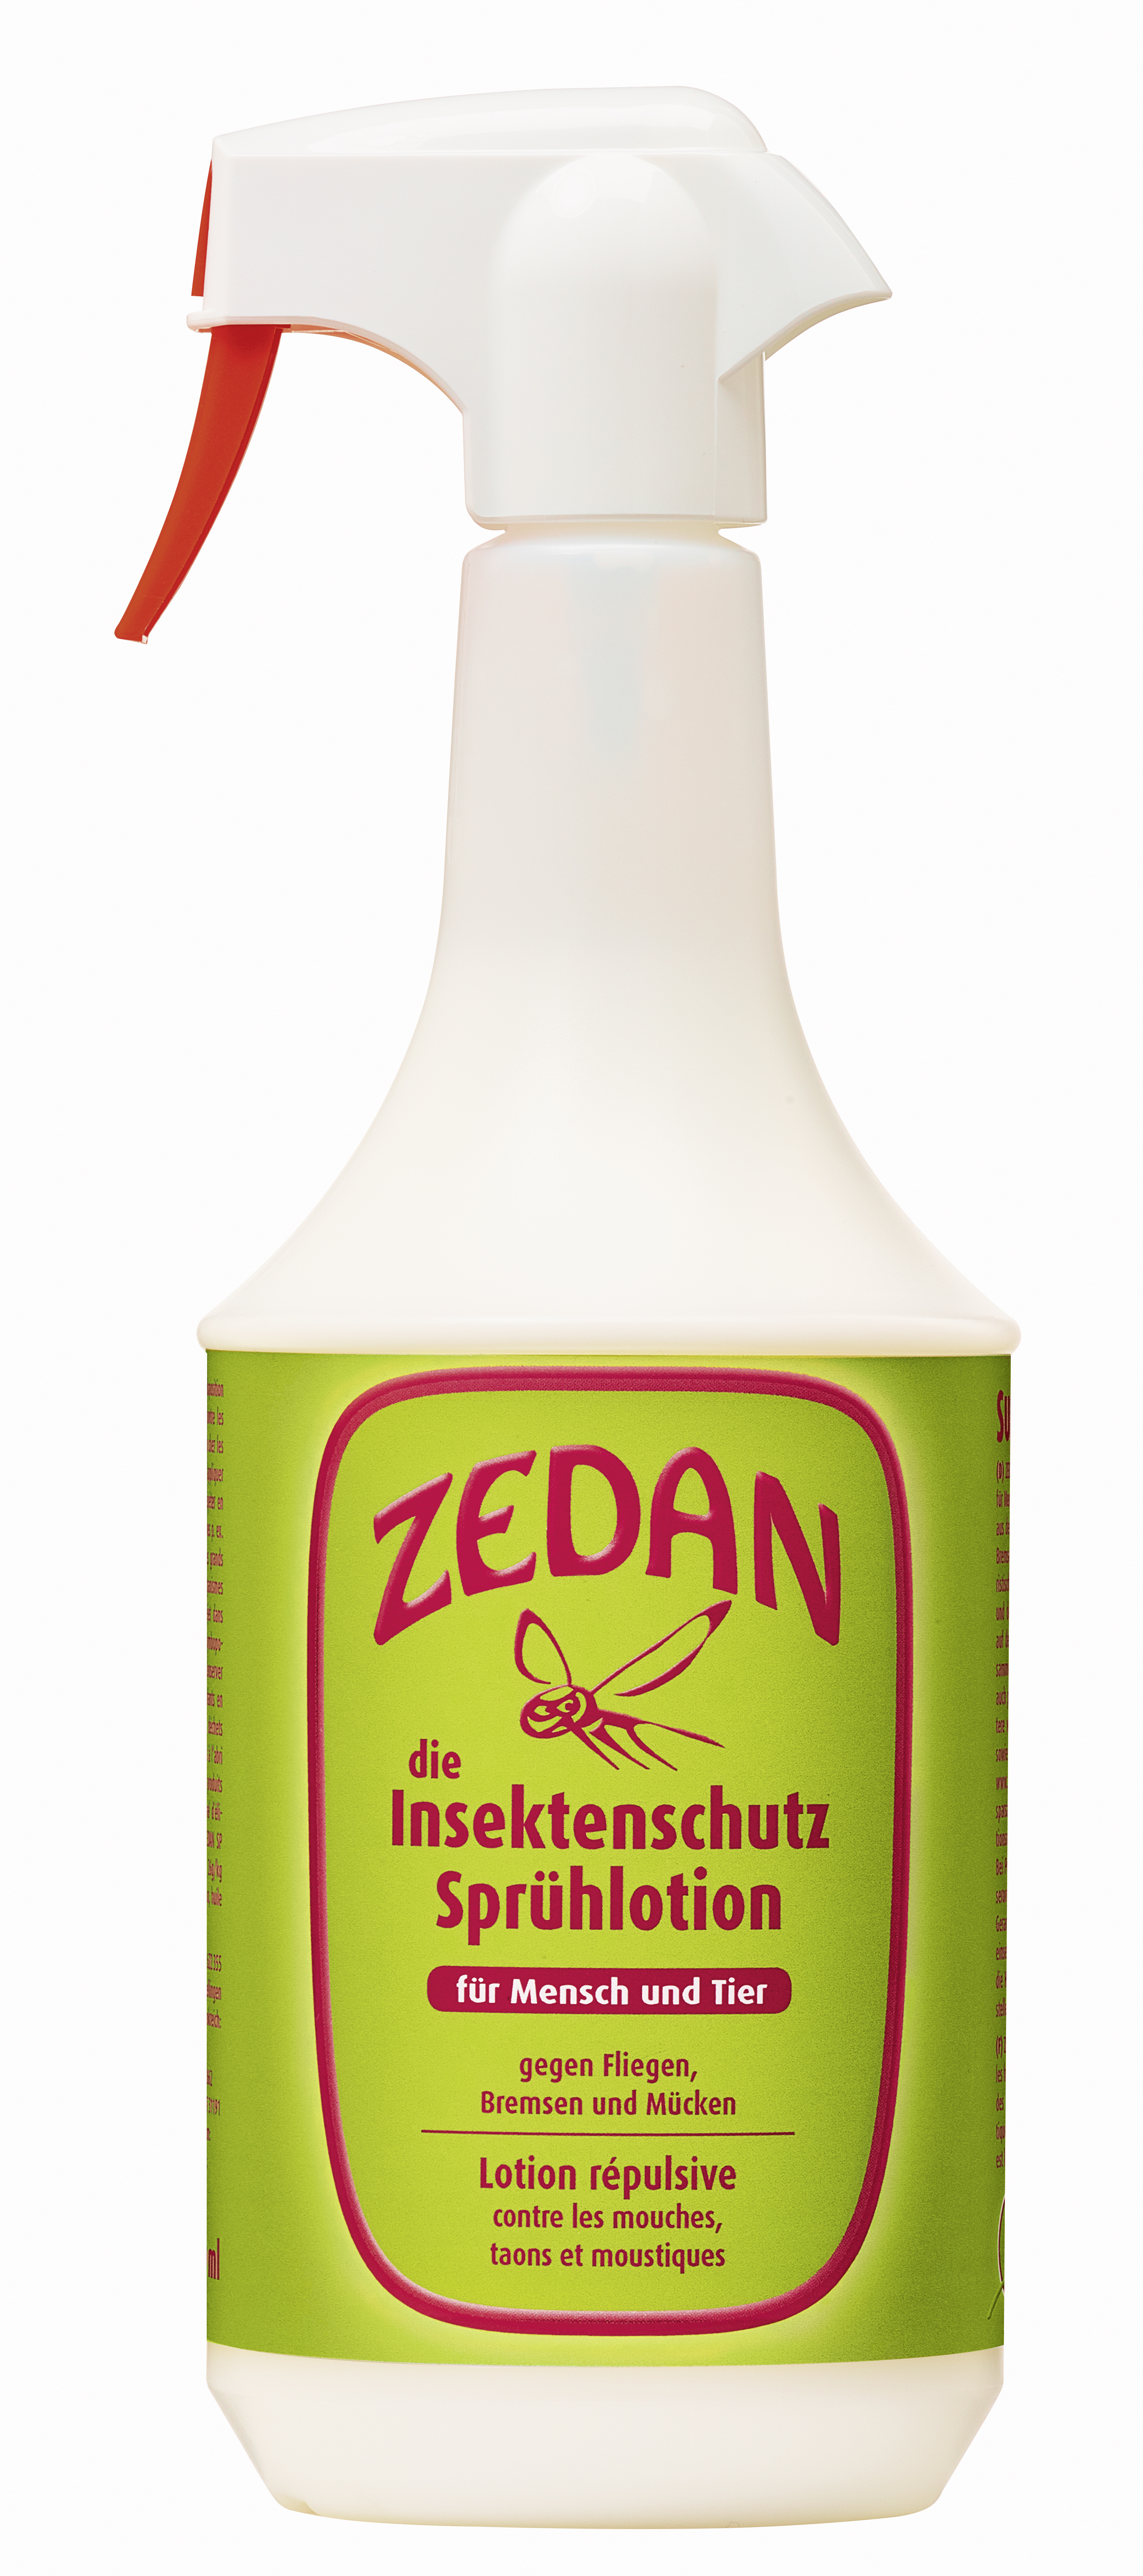 Zedan SP Insekten-Schutz 1000ml 